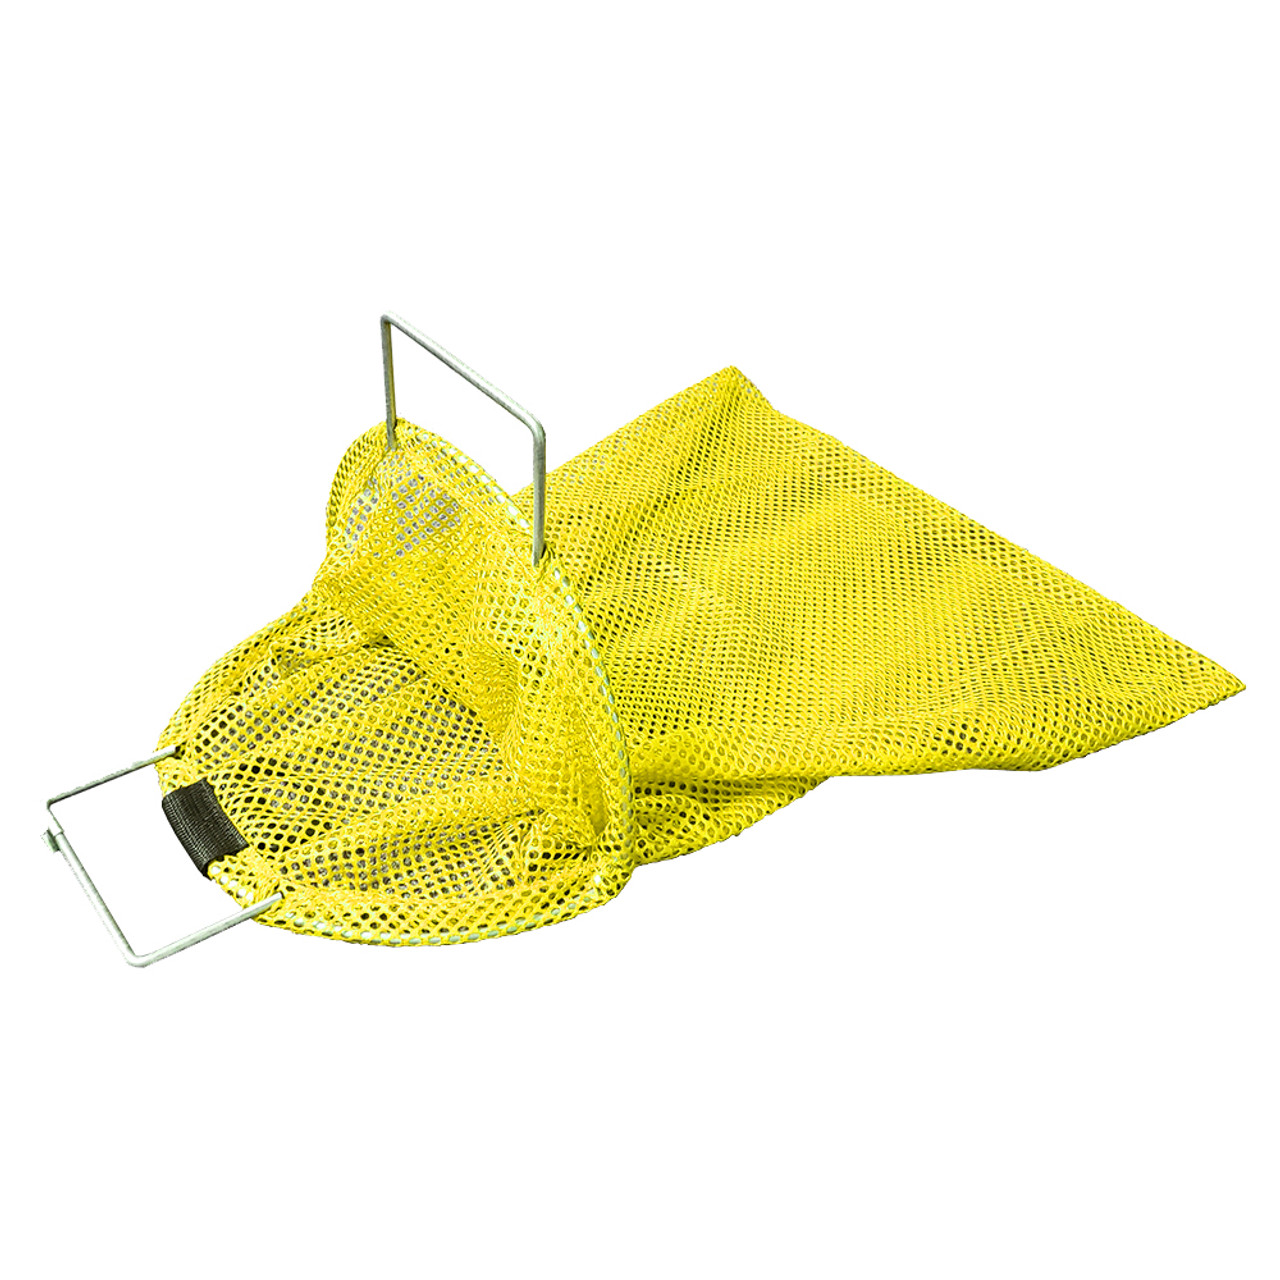 Scuba Choice Spearfishing 5mm S.S Handle Fish Mesh Bag, Neon Yellow